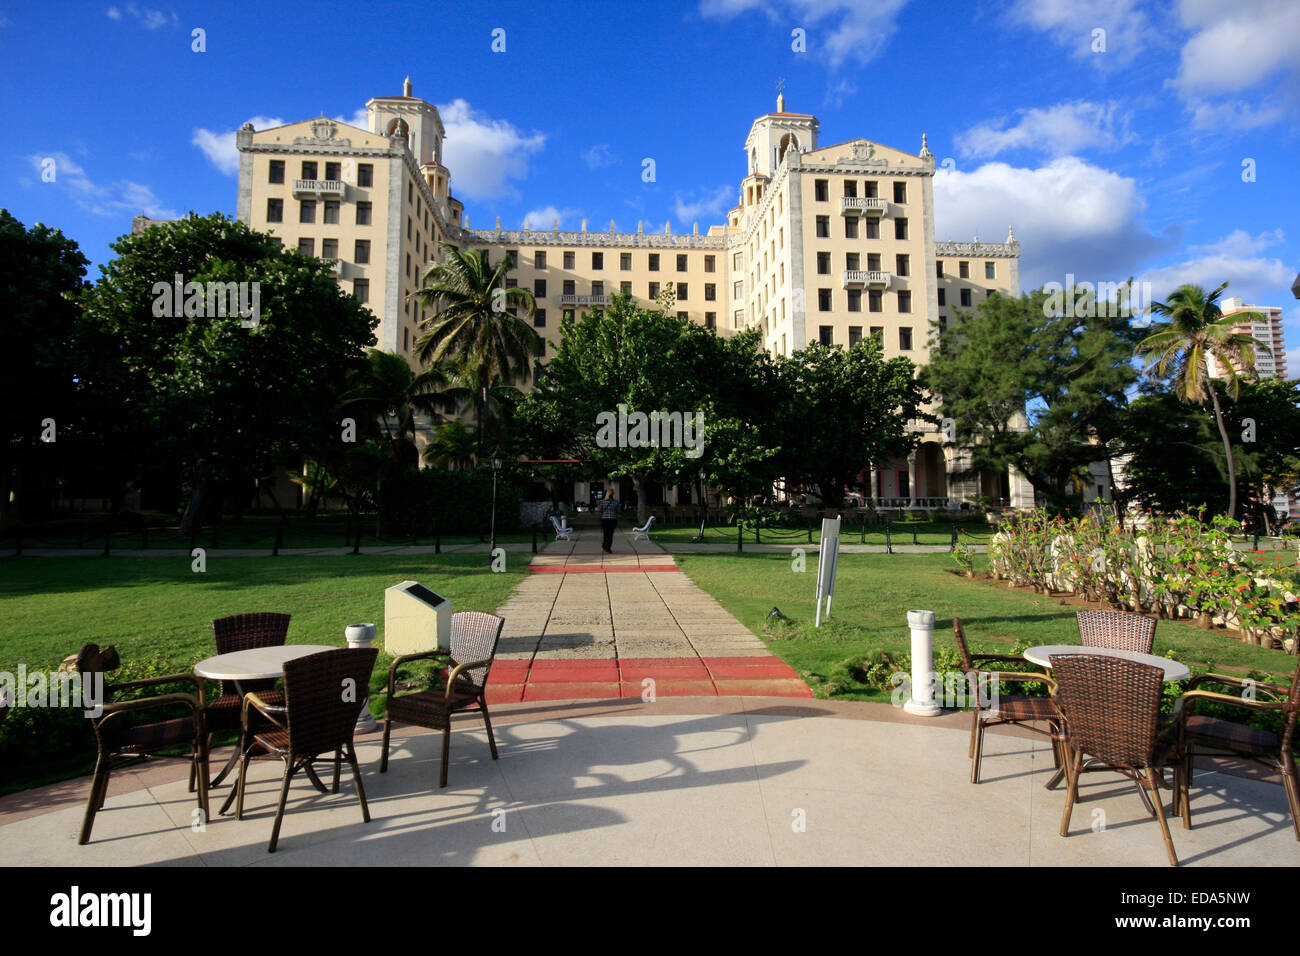 The rear of the Hotel Nacional De Cuba in Havana looking over the gardens Stock Photo